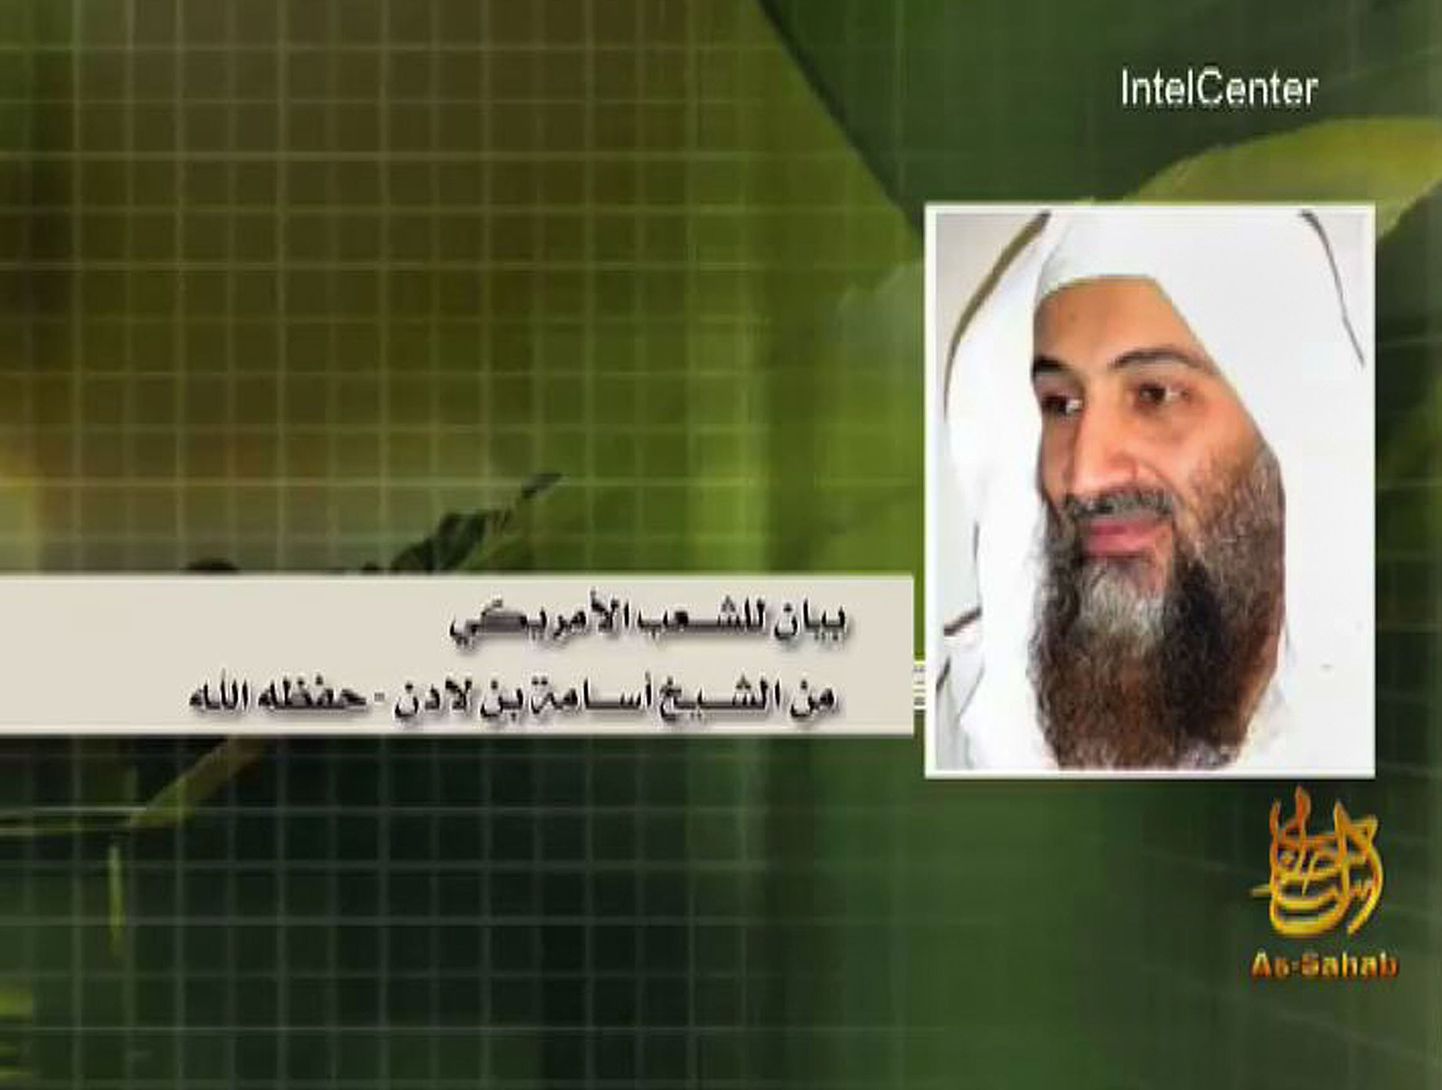 Обращение Усама бен Ладена была показано на сайте организации "Аш-Шабаб".